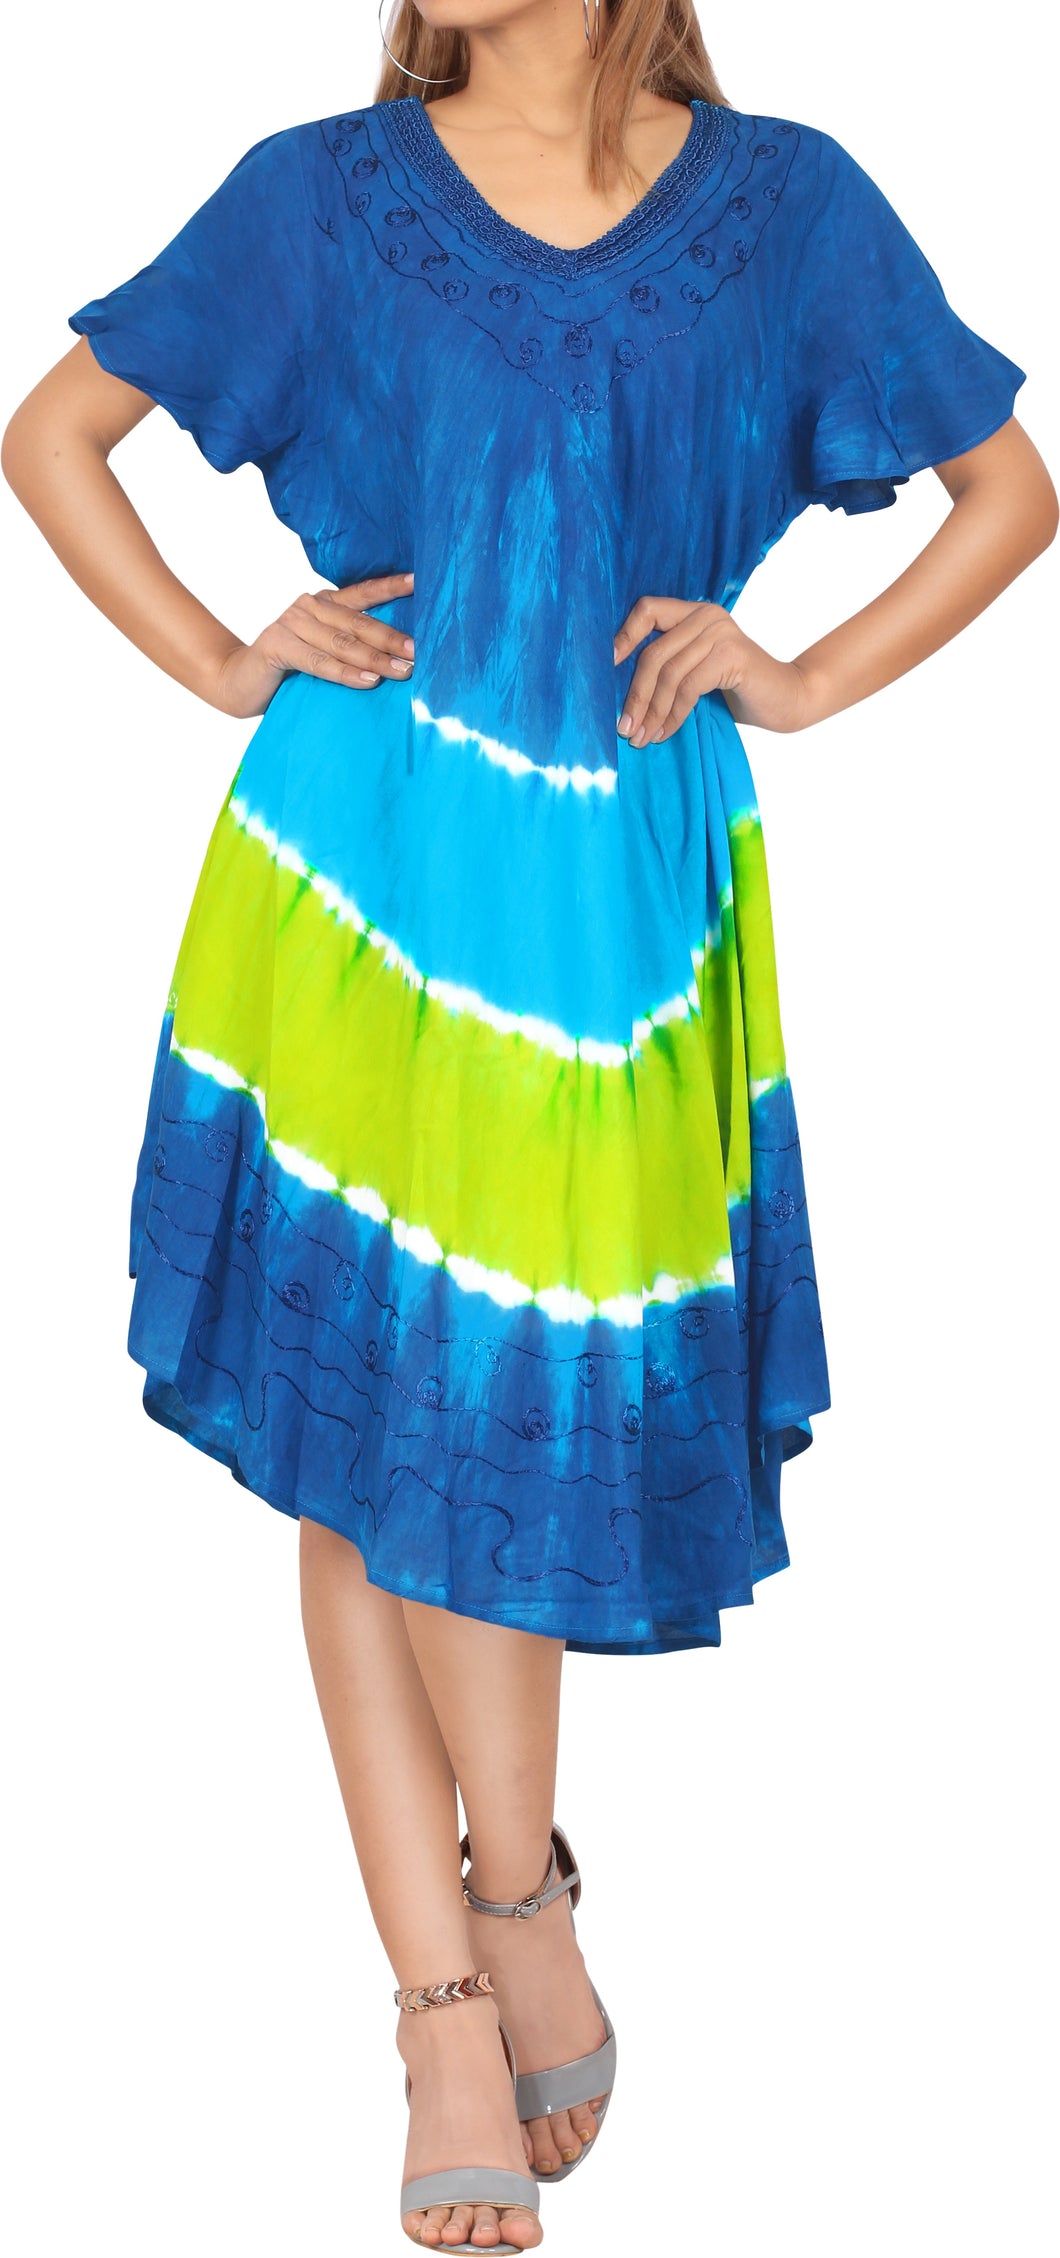 LA LEELA Embroidered Tie Dye Short Beachwear Dress OSFM 14-20W [L- 2X]Blue_3692